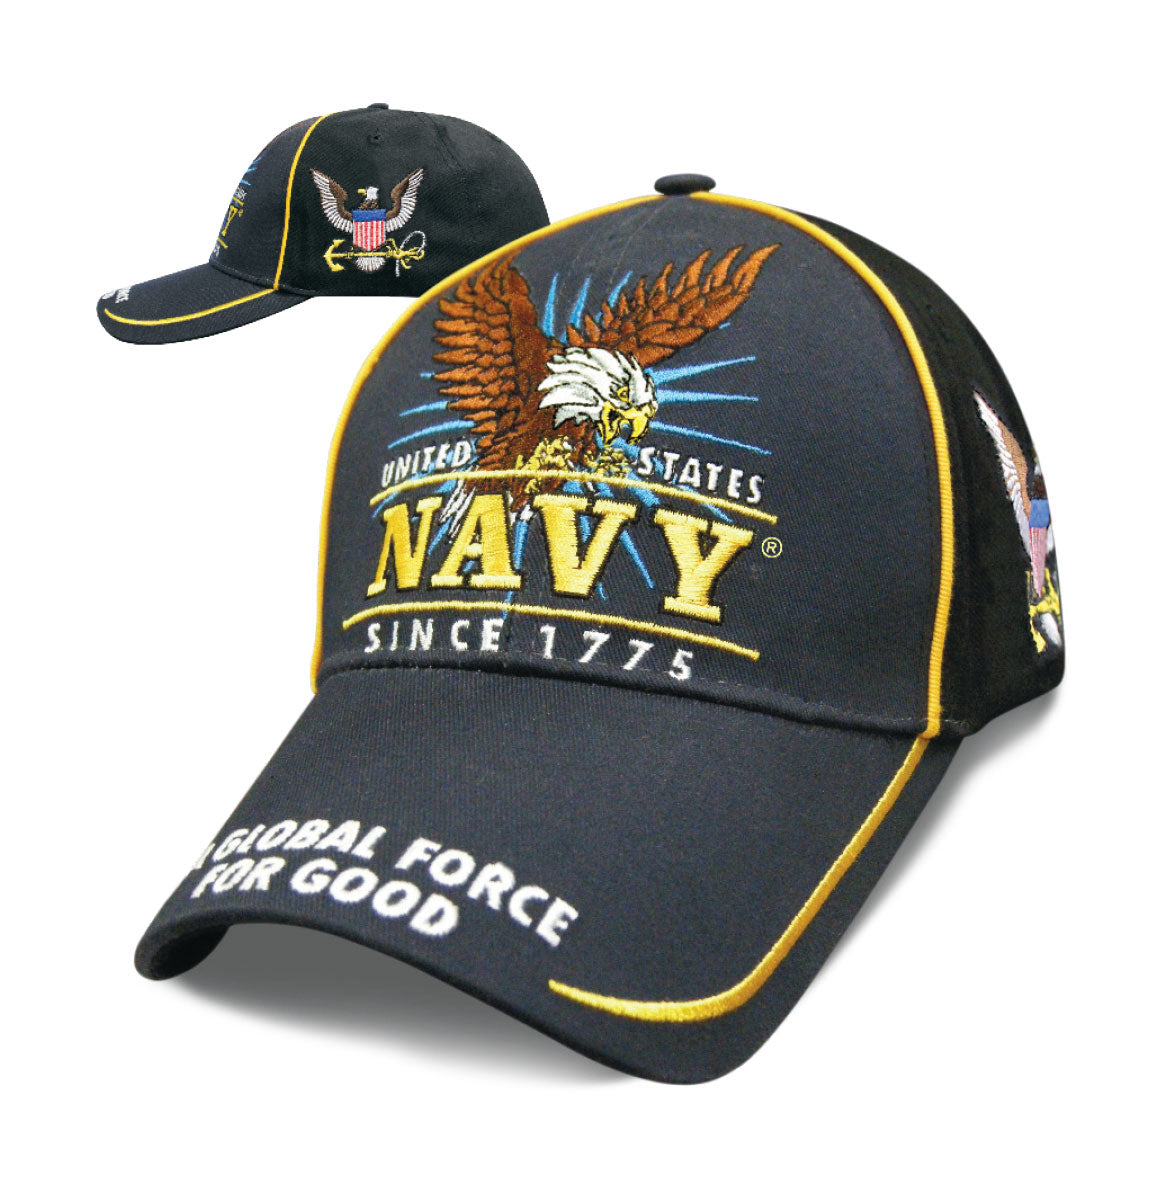 Victory: Navy